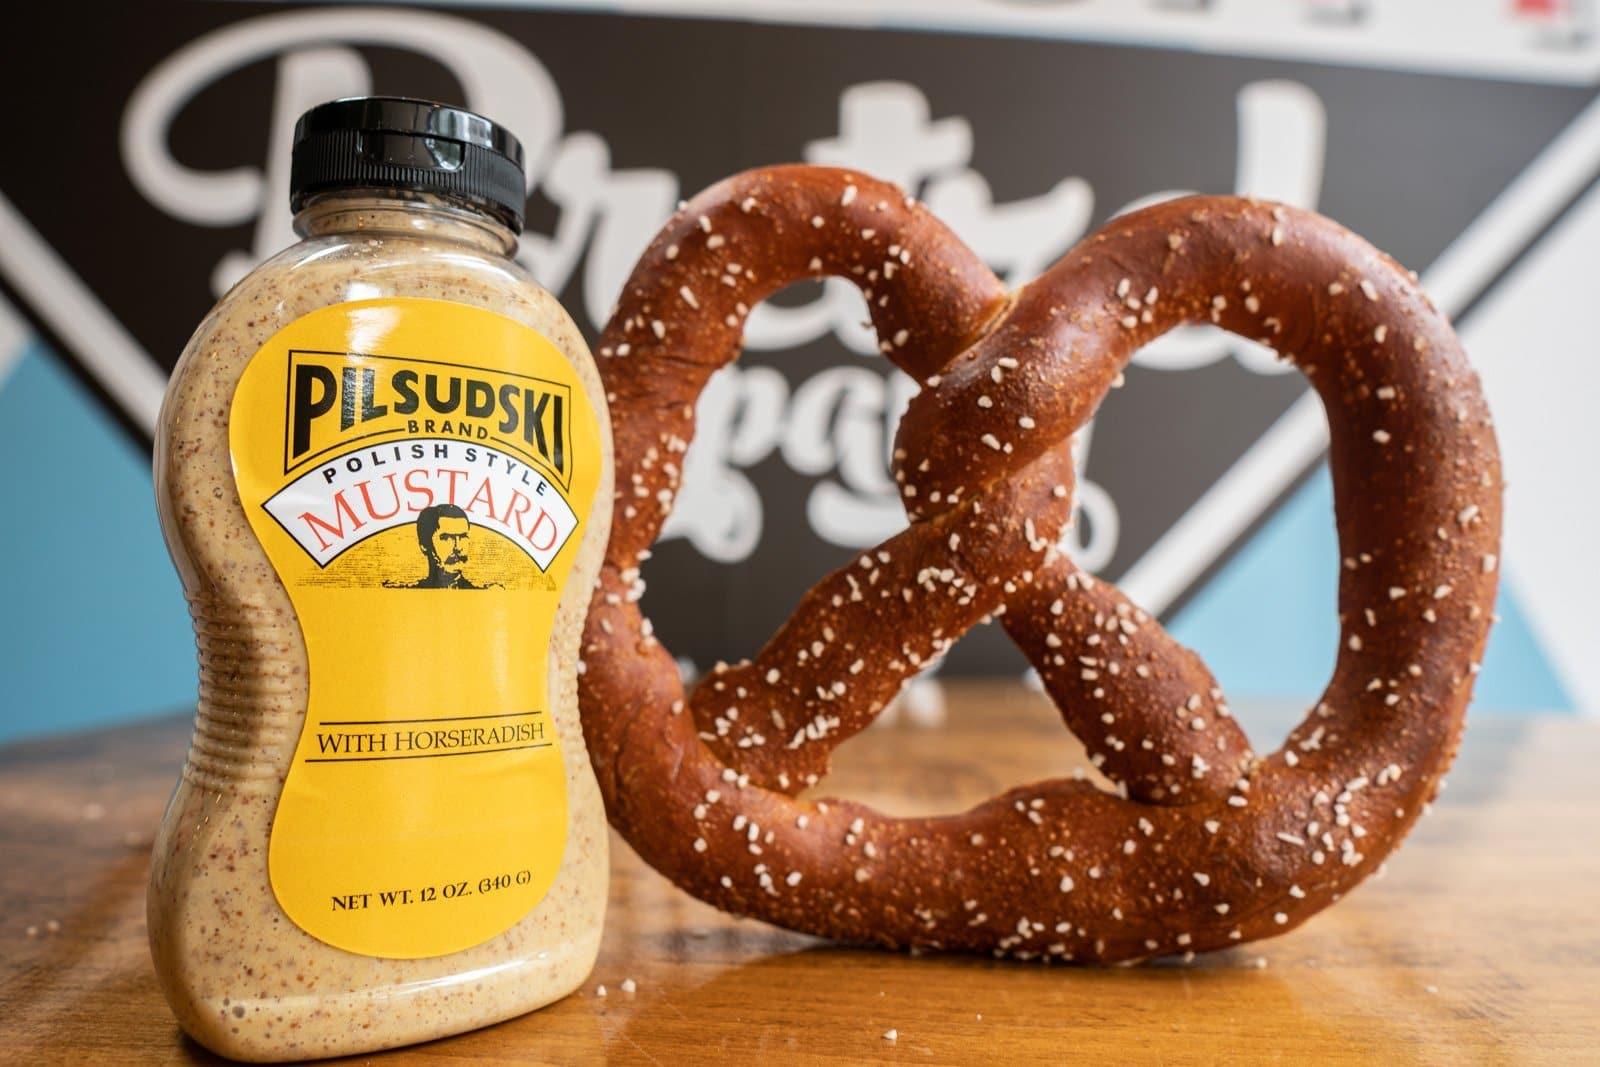 Pilsudski Original Mustard - The Pretzel Company